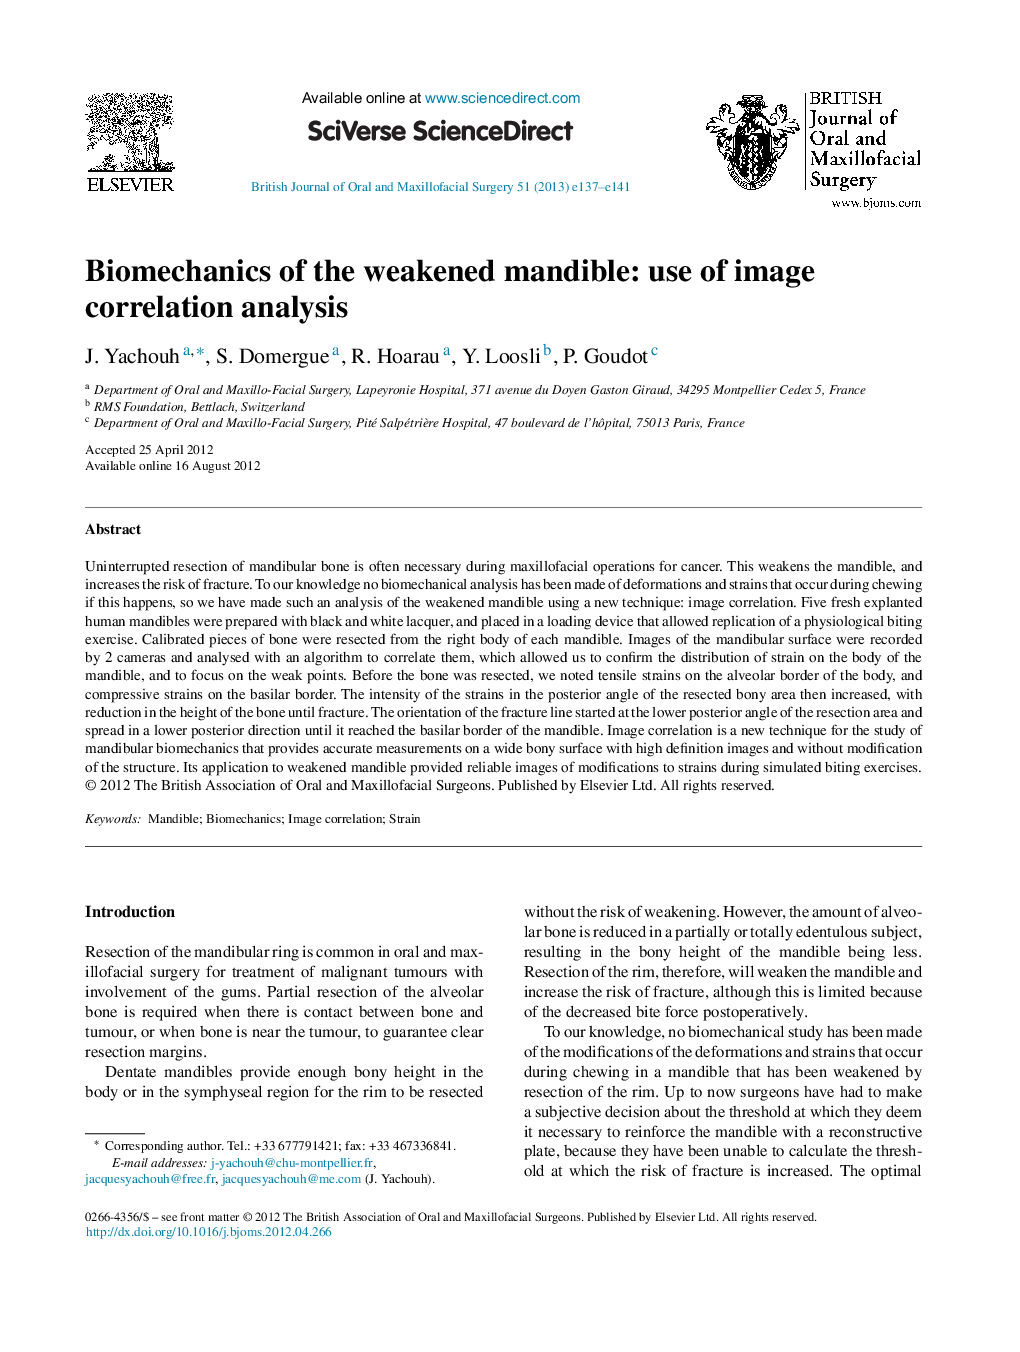 Biomechanics of the weakened mandible: use of image correlation analysis